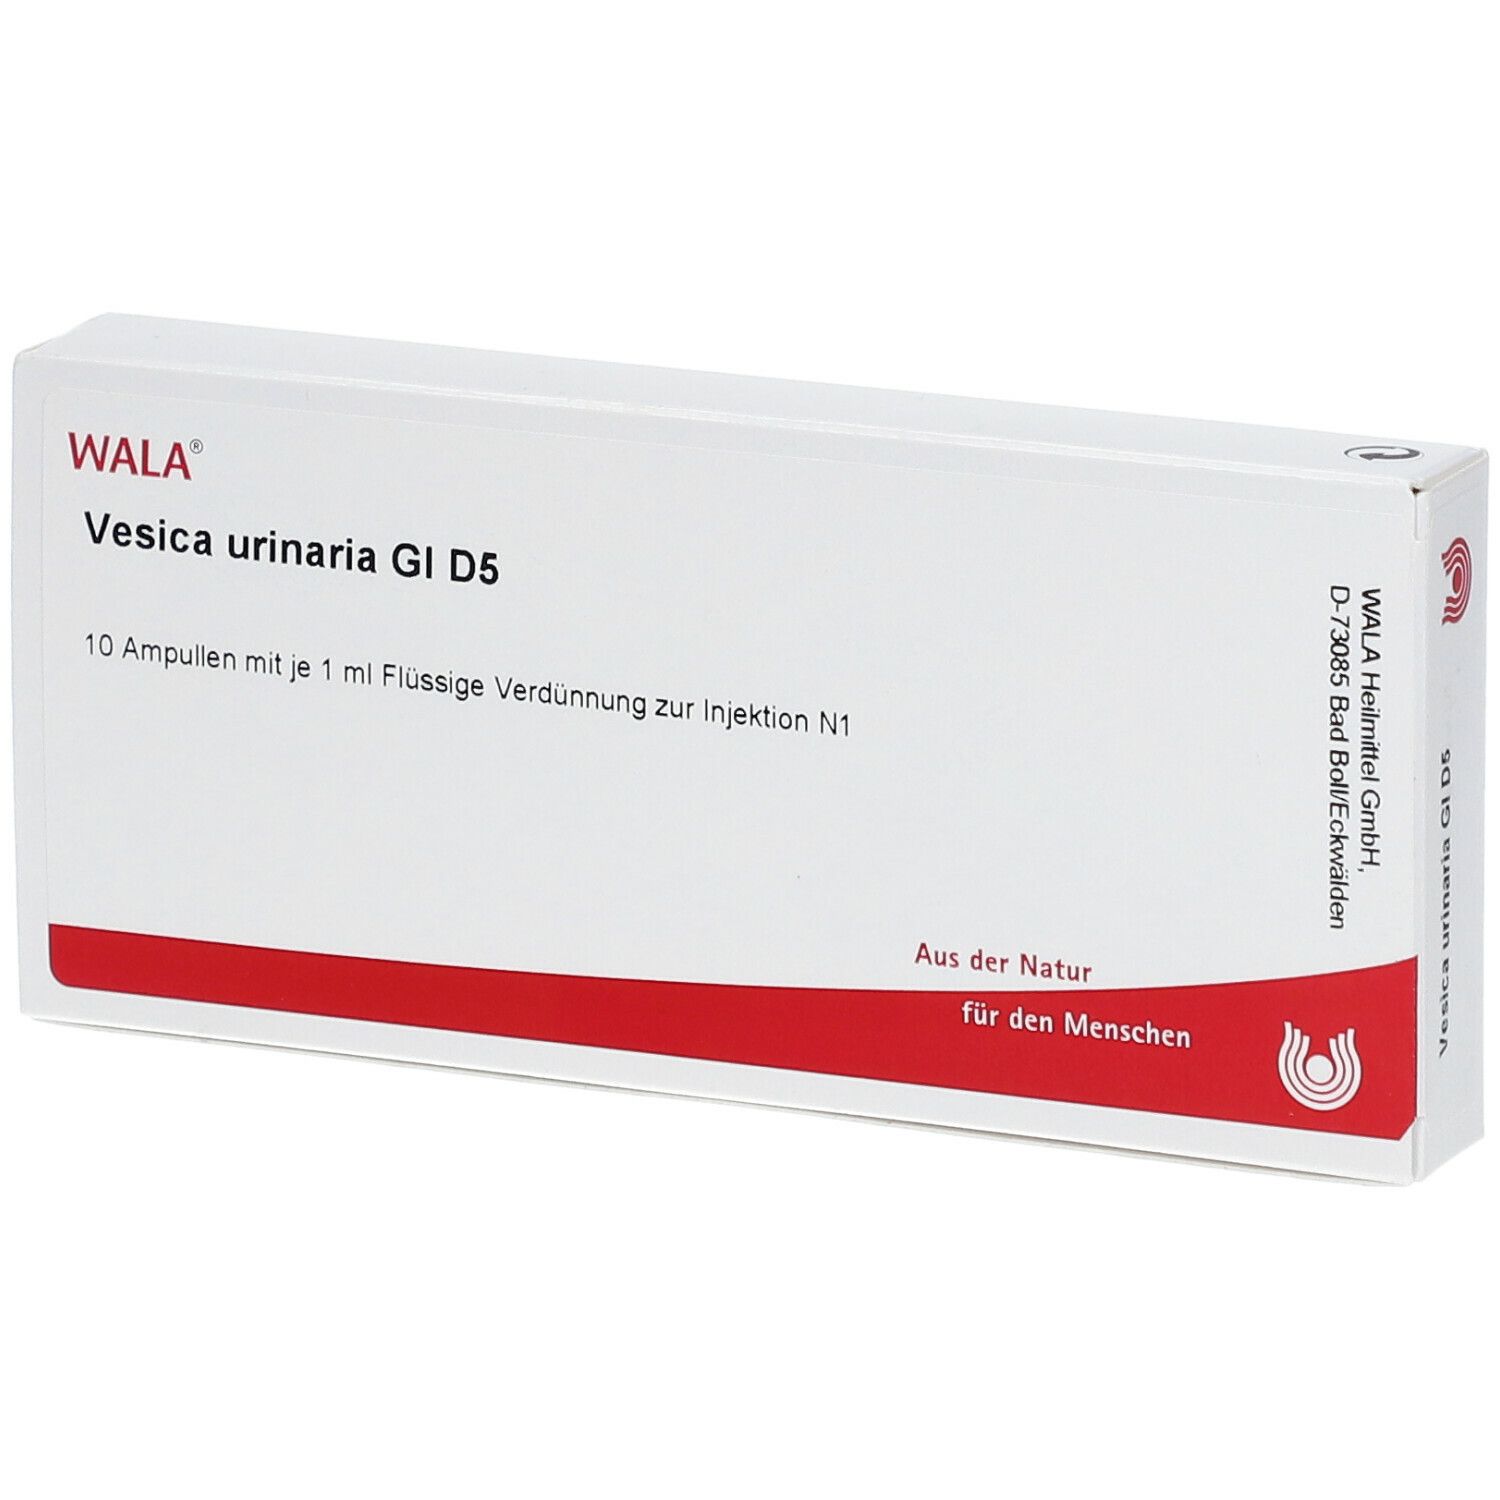 WALA® Vesica urinaria Gl D 5